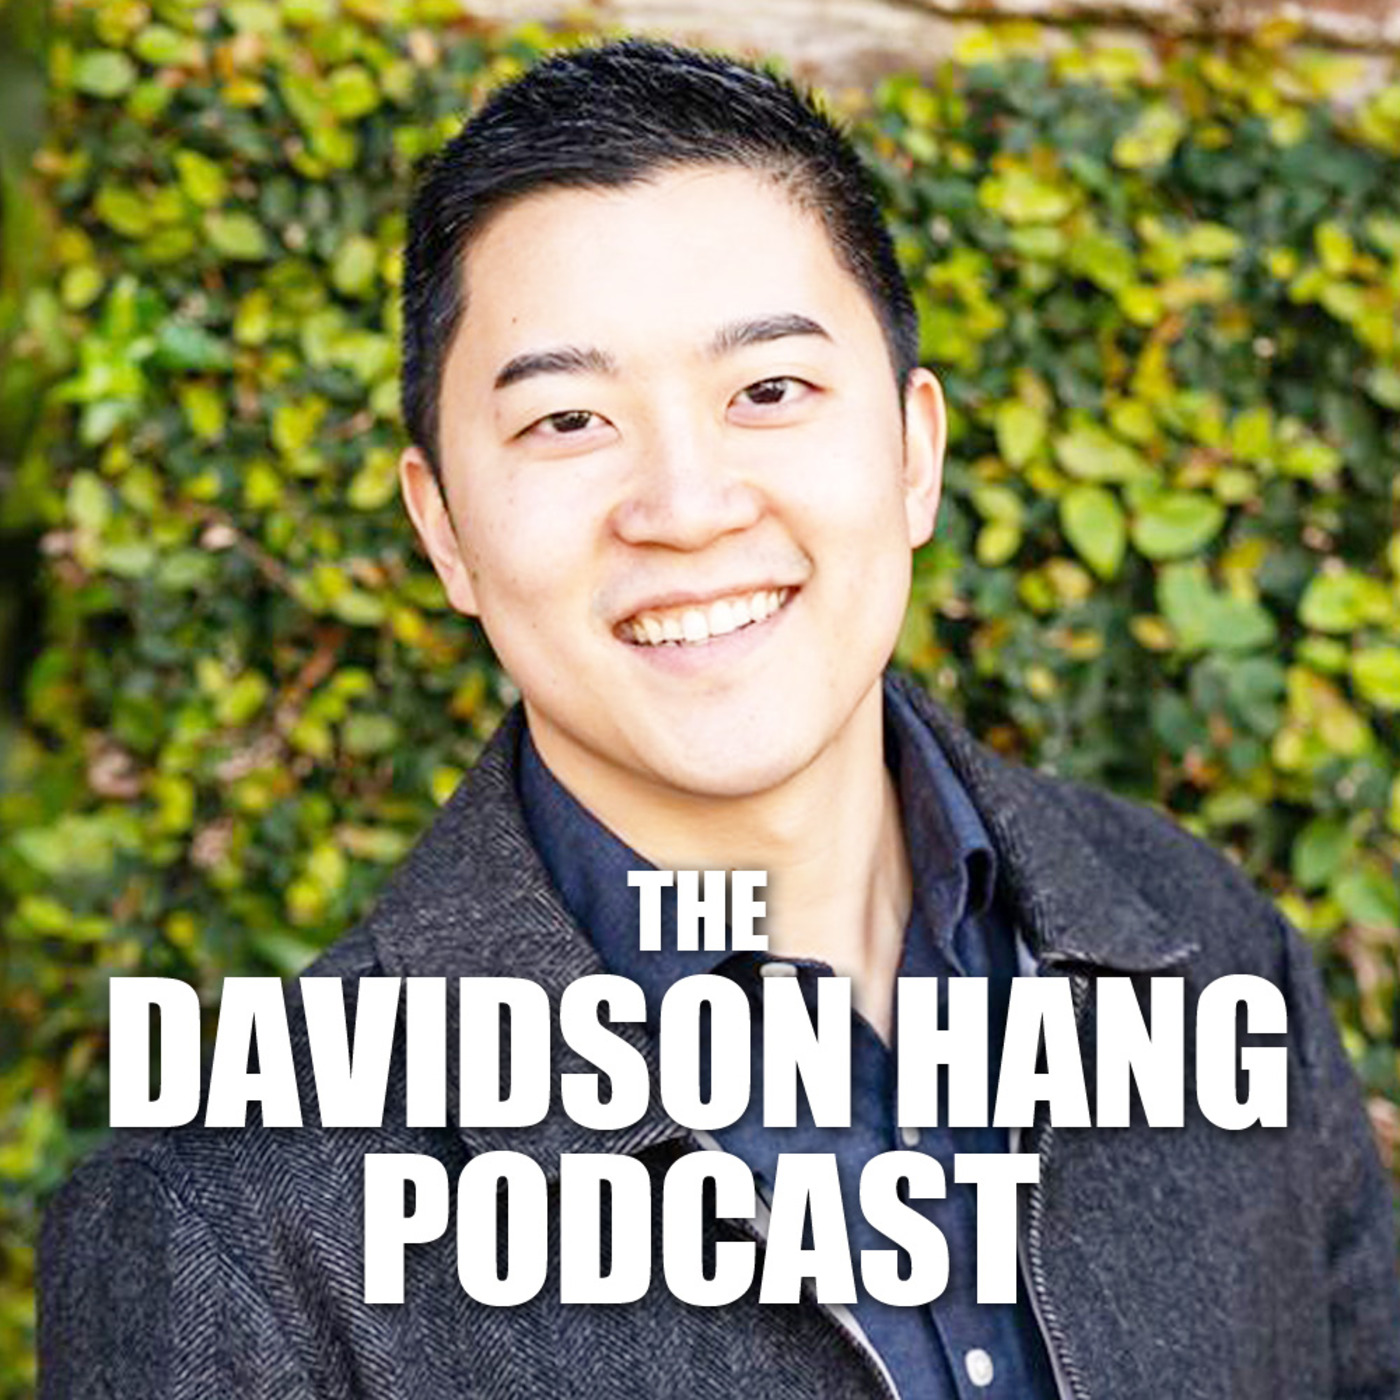 Episode 156: Episode 156 of the Davidson Hang Podcast on Transformation, Tony Robbins, Landmark Worldwide, and Accomplishment Coaching